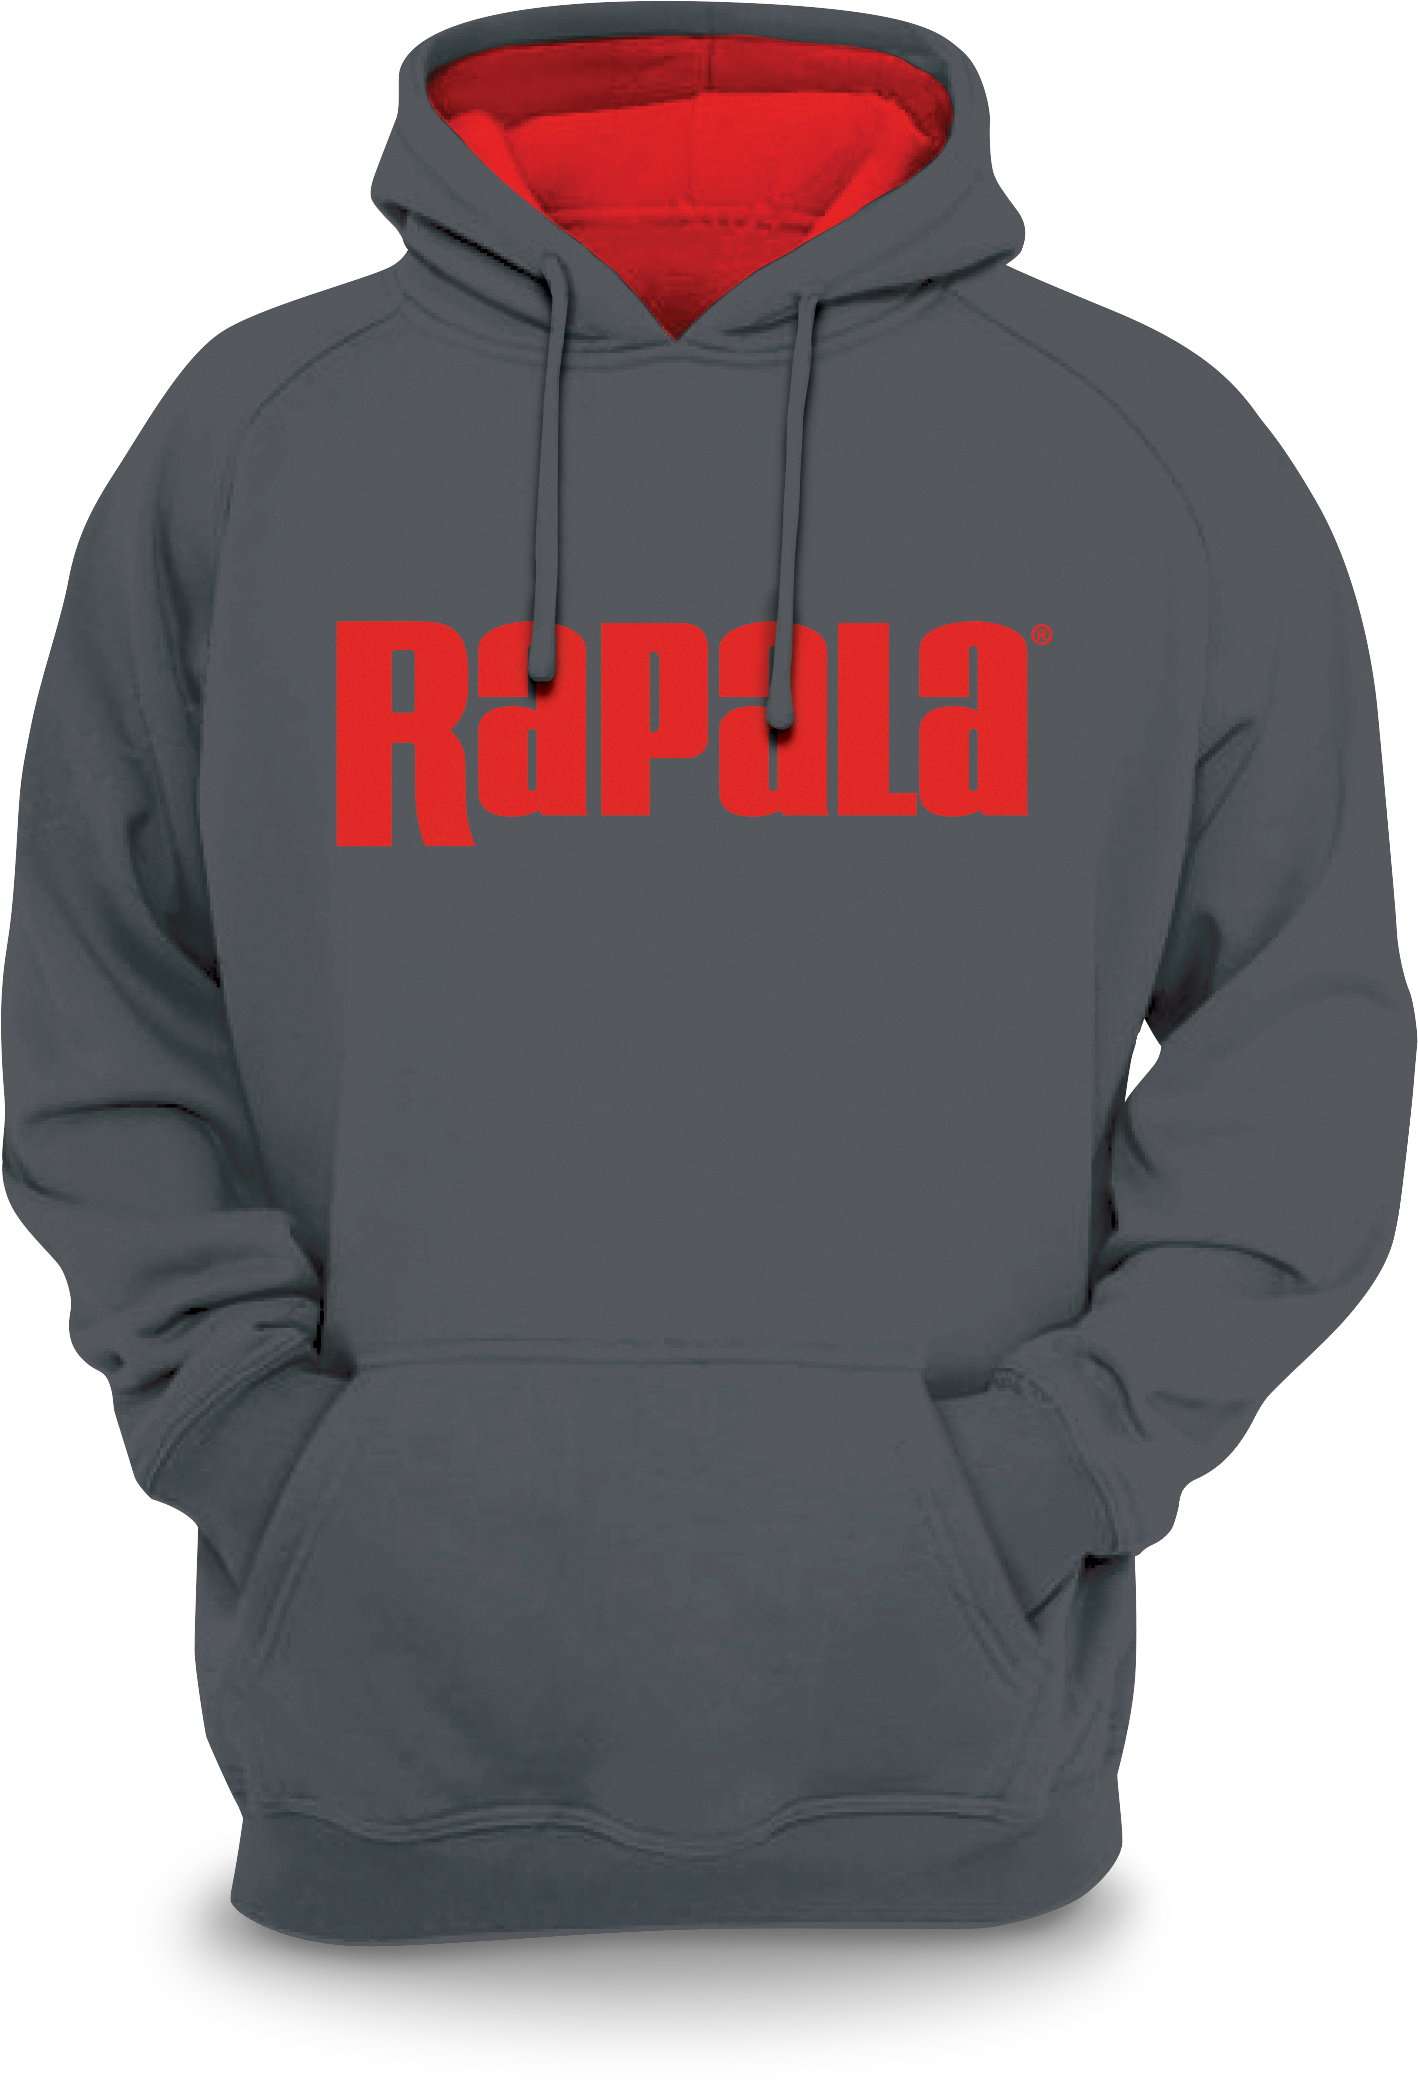 Rapala Hooded Sweatshirt Fishing Logo Full Fleece Interior Hoodie